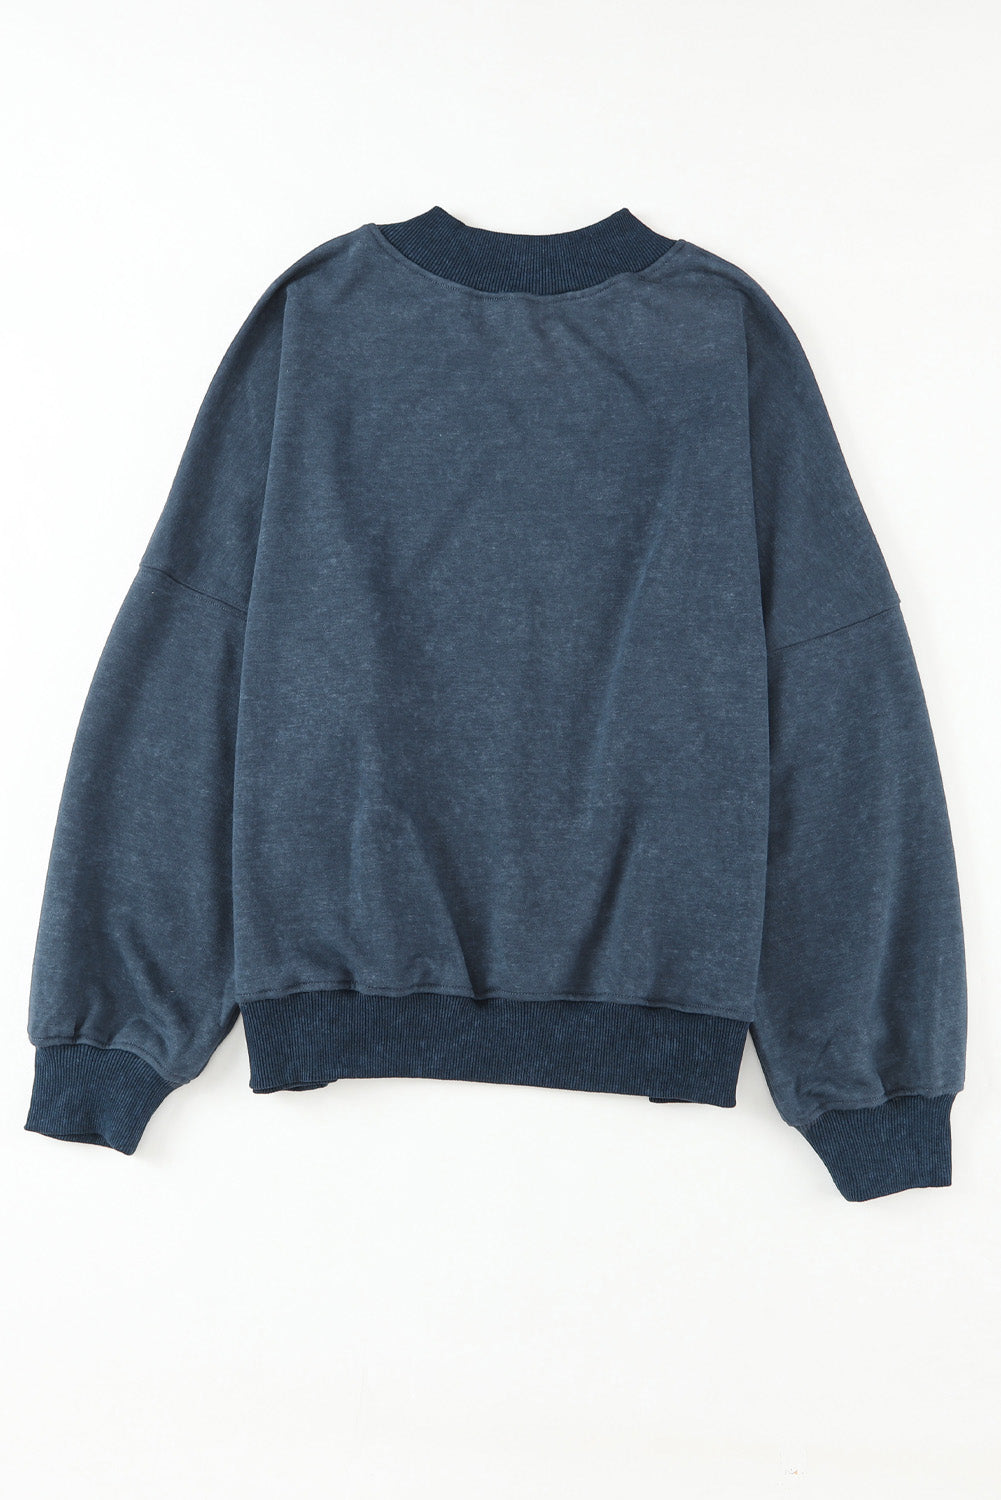 Sky Blue Resting Witch Face Graphic Drop Shoulder Sweatshirt Graphic Sweatshirts JT's Designer Fashion